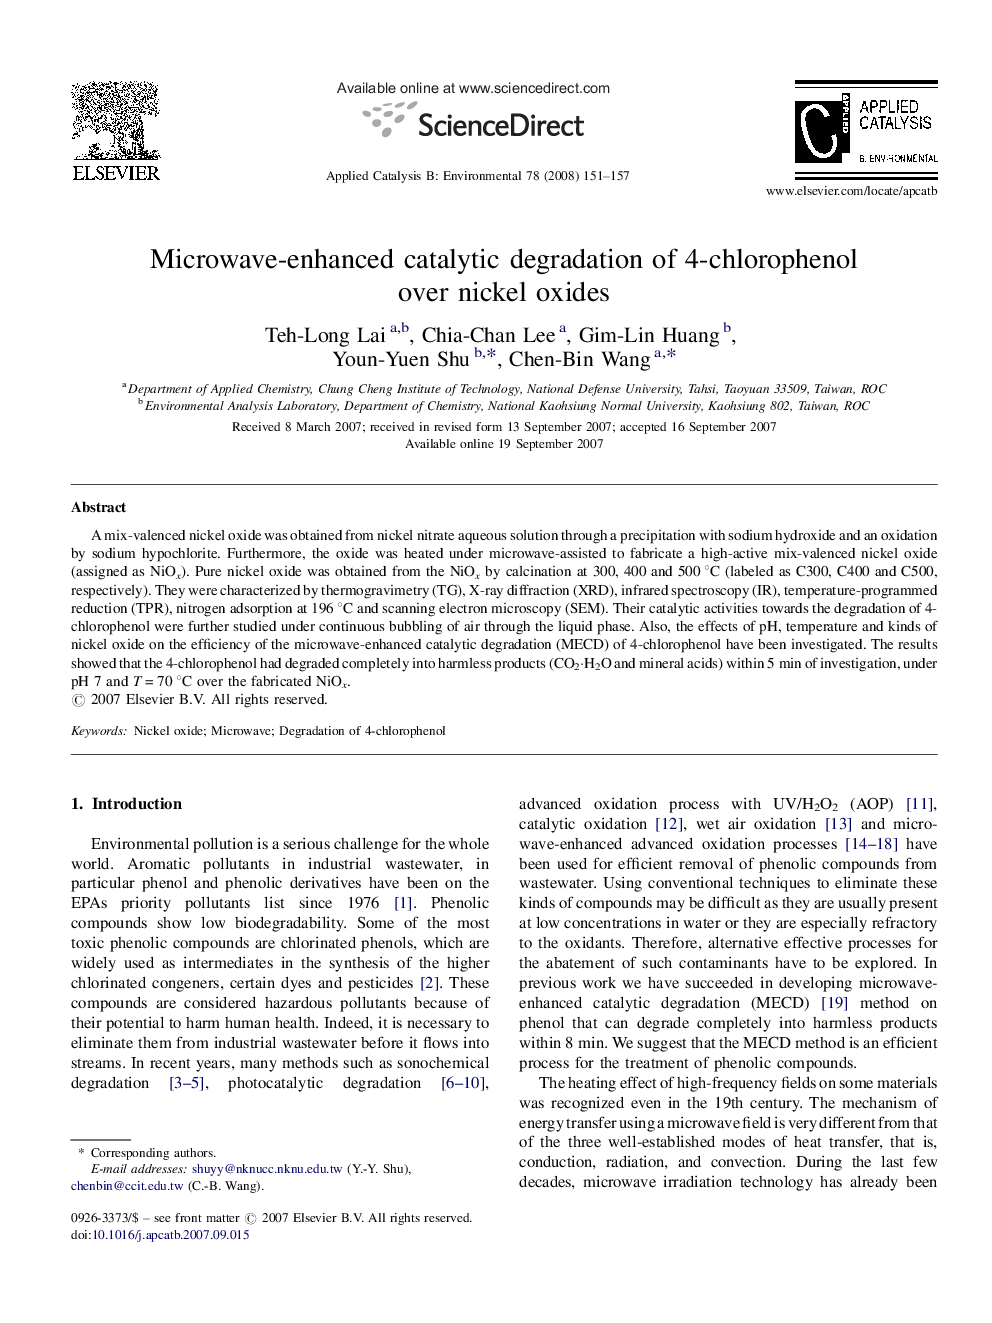 Microwave-enhanced catalytic degradation of 4-chlorophenol over nickel oxides